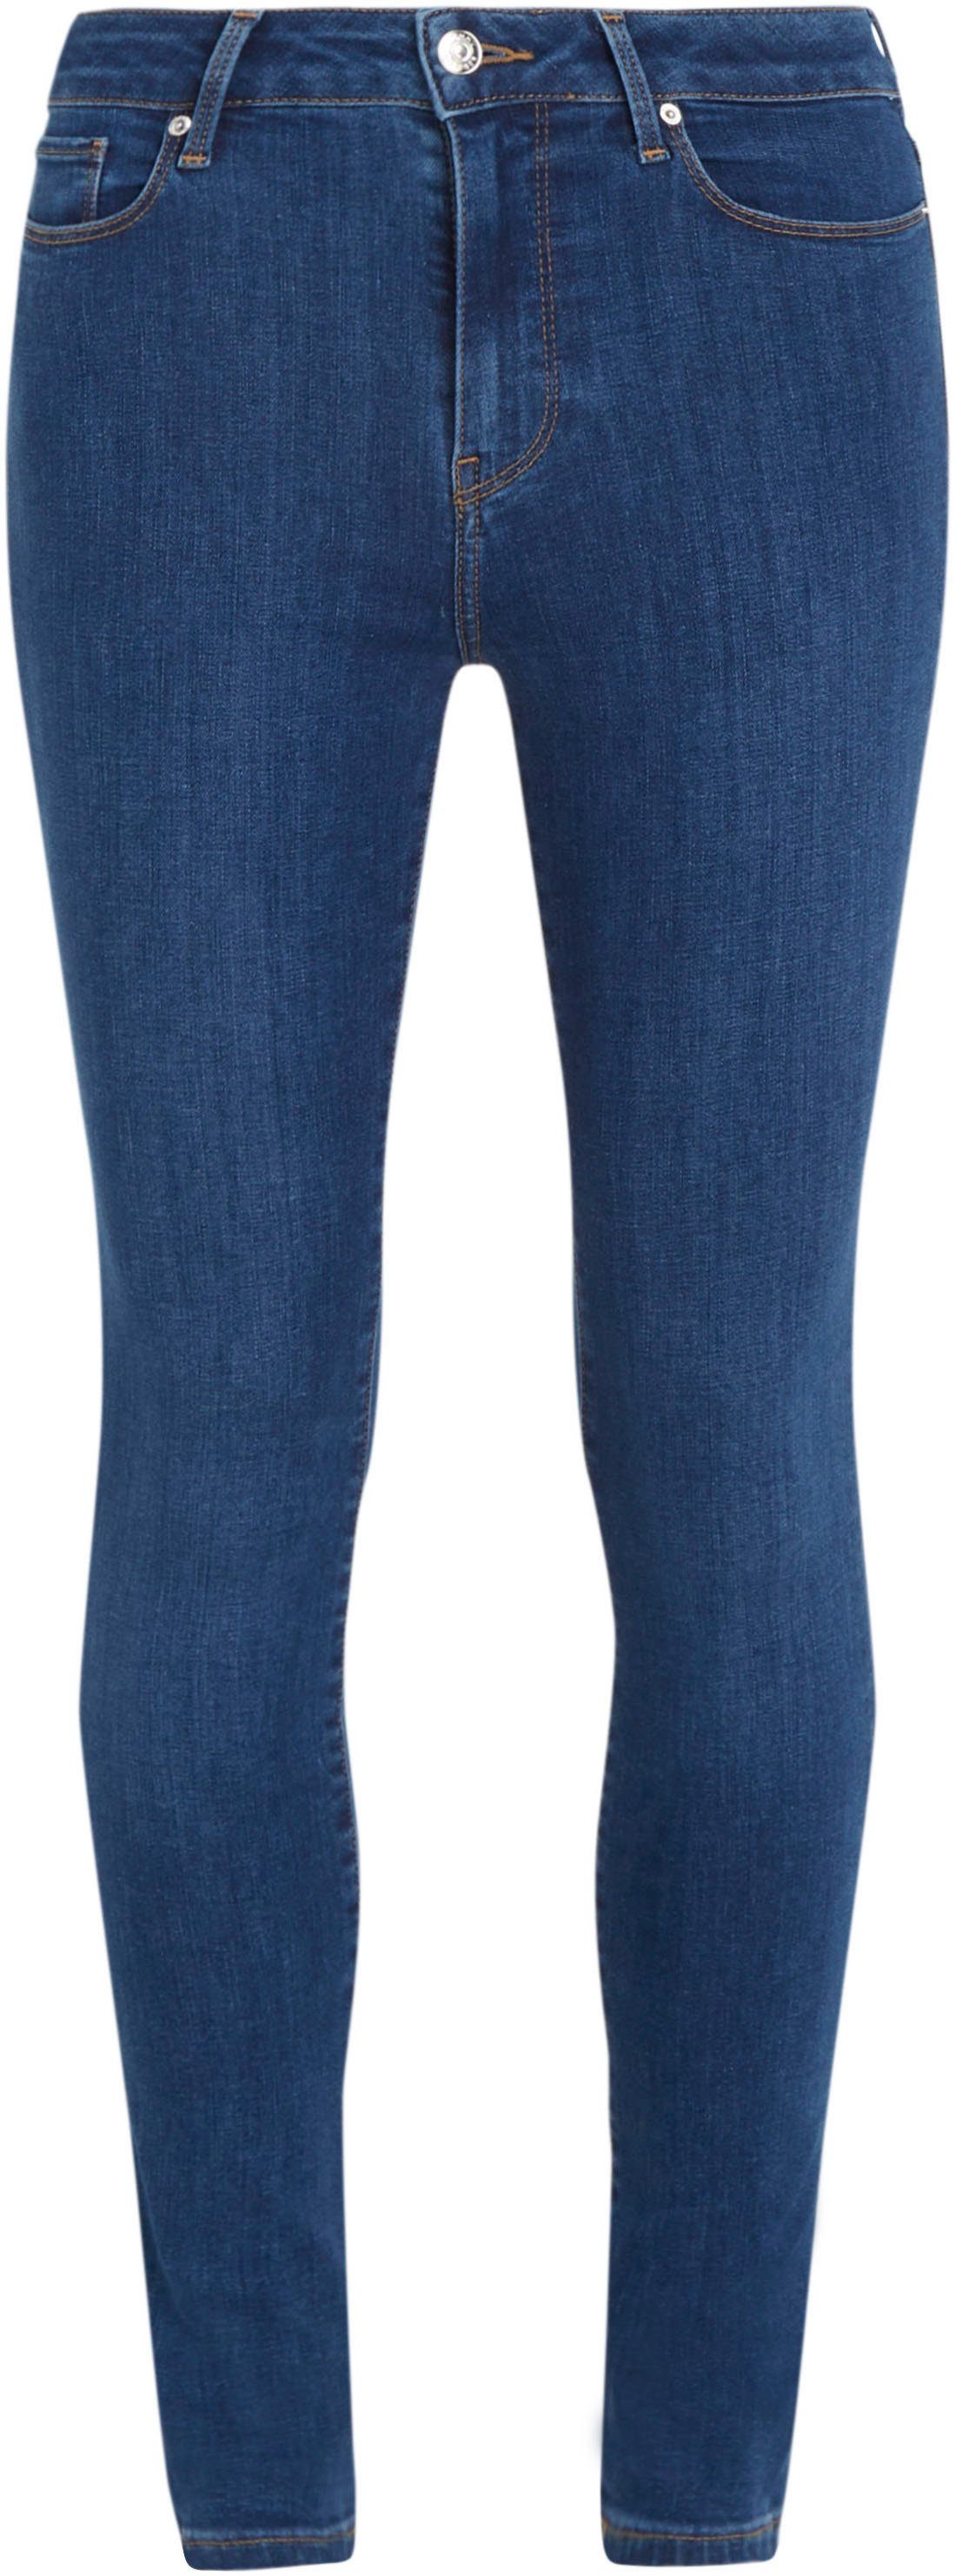 Tommy Hilfiger Skinny-fit-Jeans TH FLEX HARLEM U SKINNY HW KAI in blauer Waschung | Stretchjeans